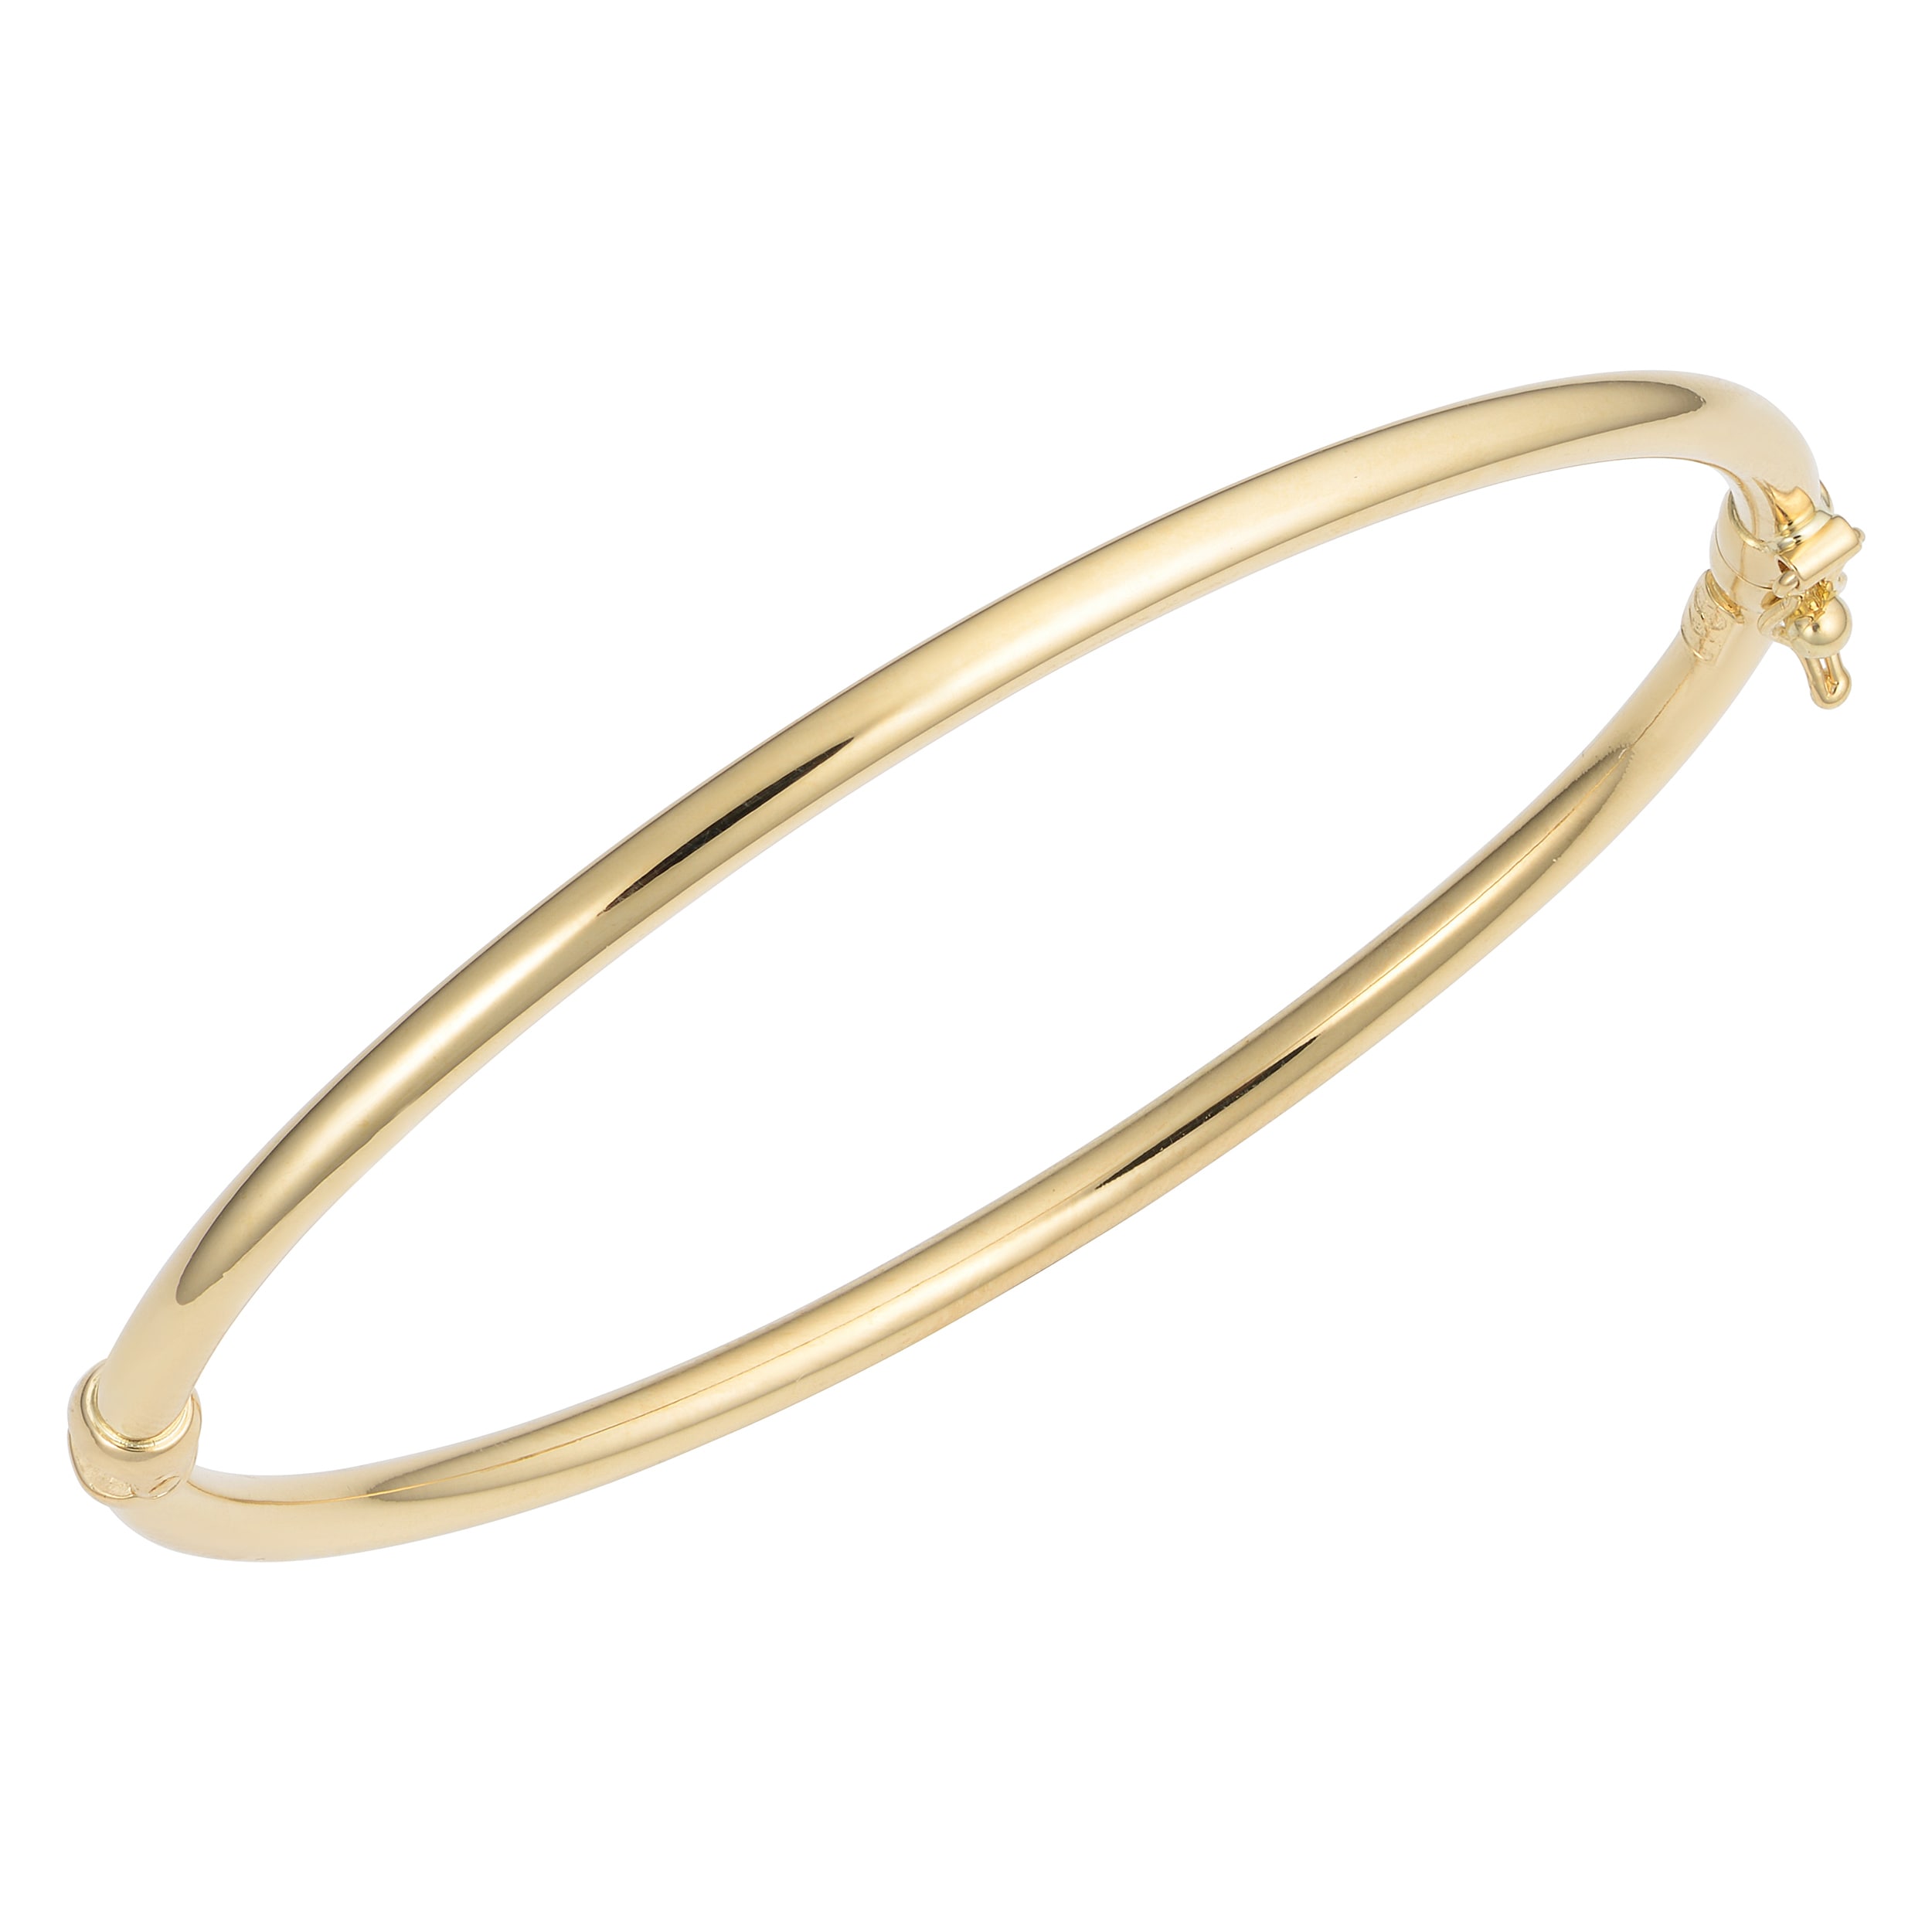 gold bangle bracelet with clasp